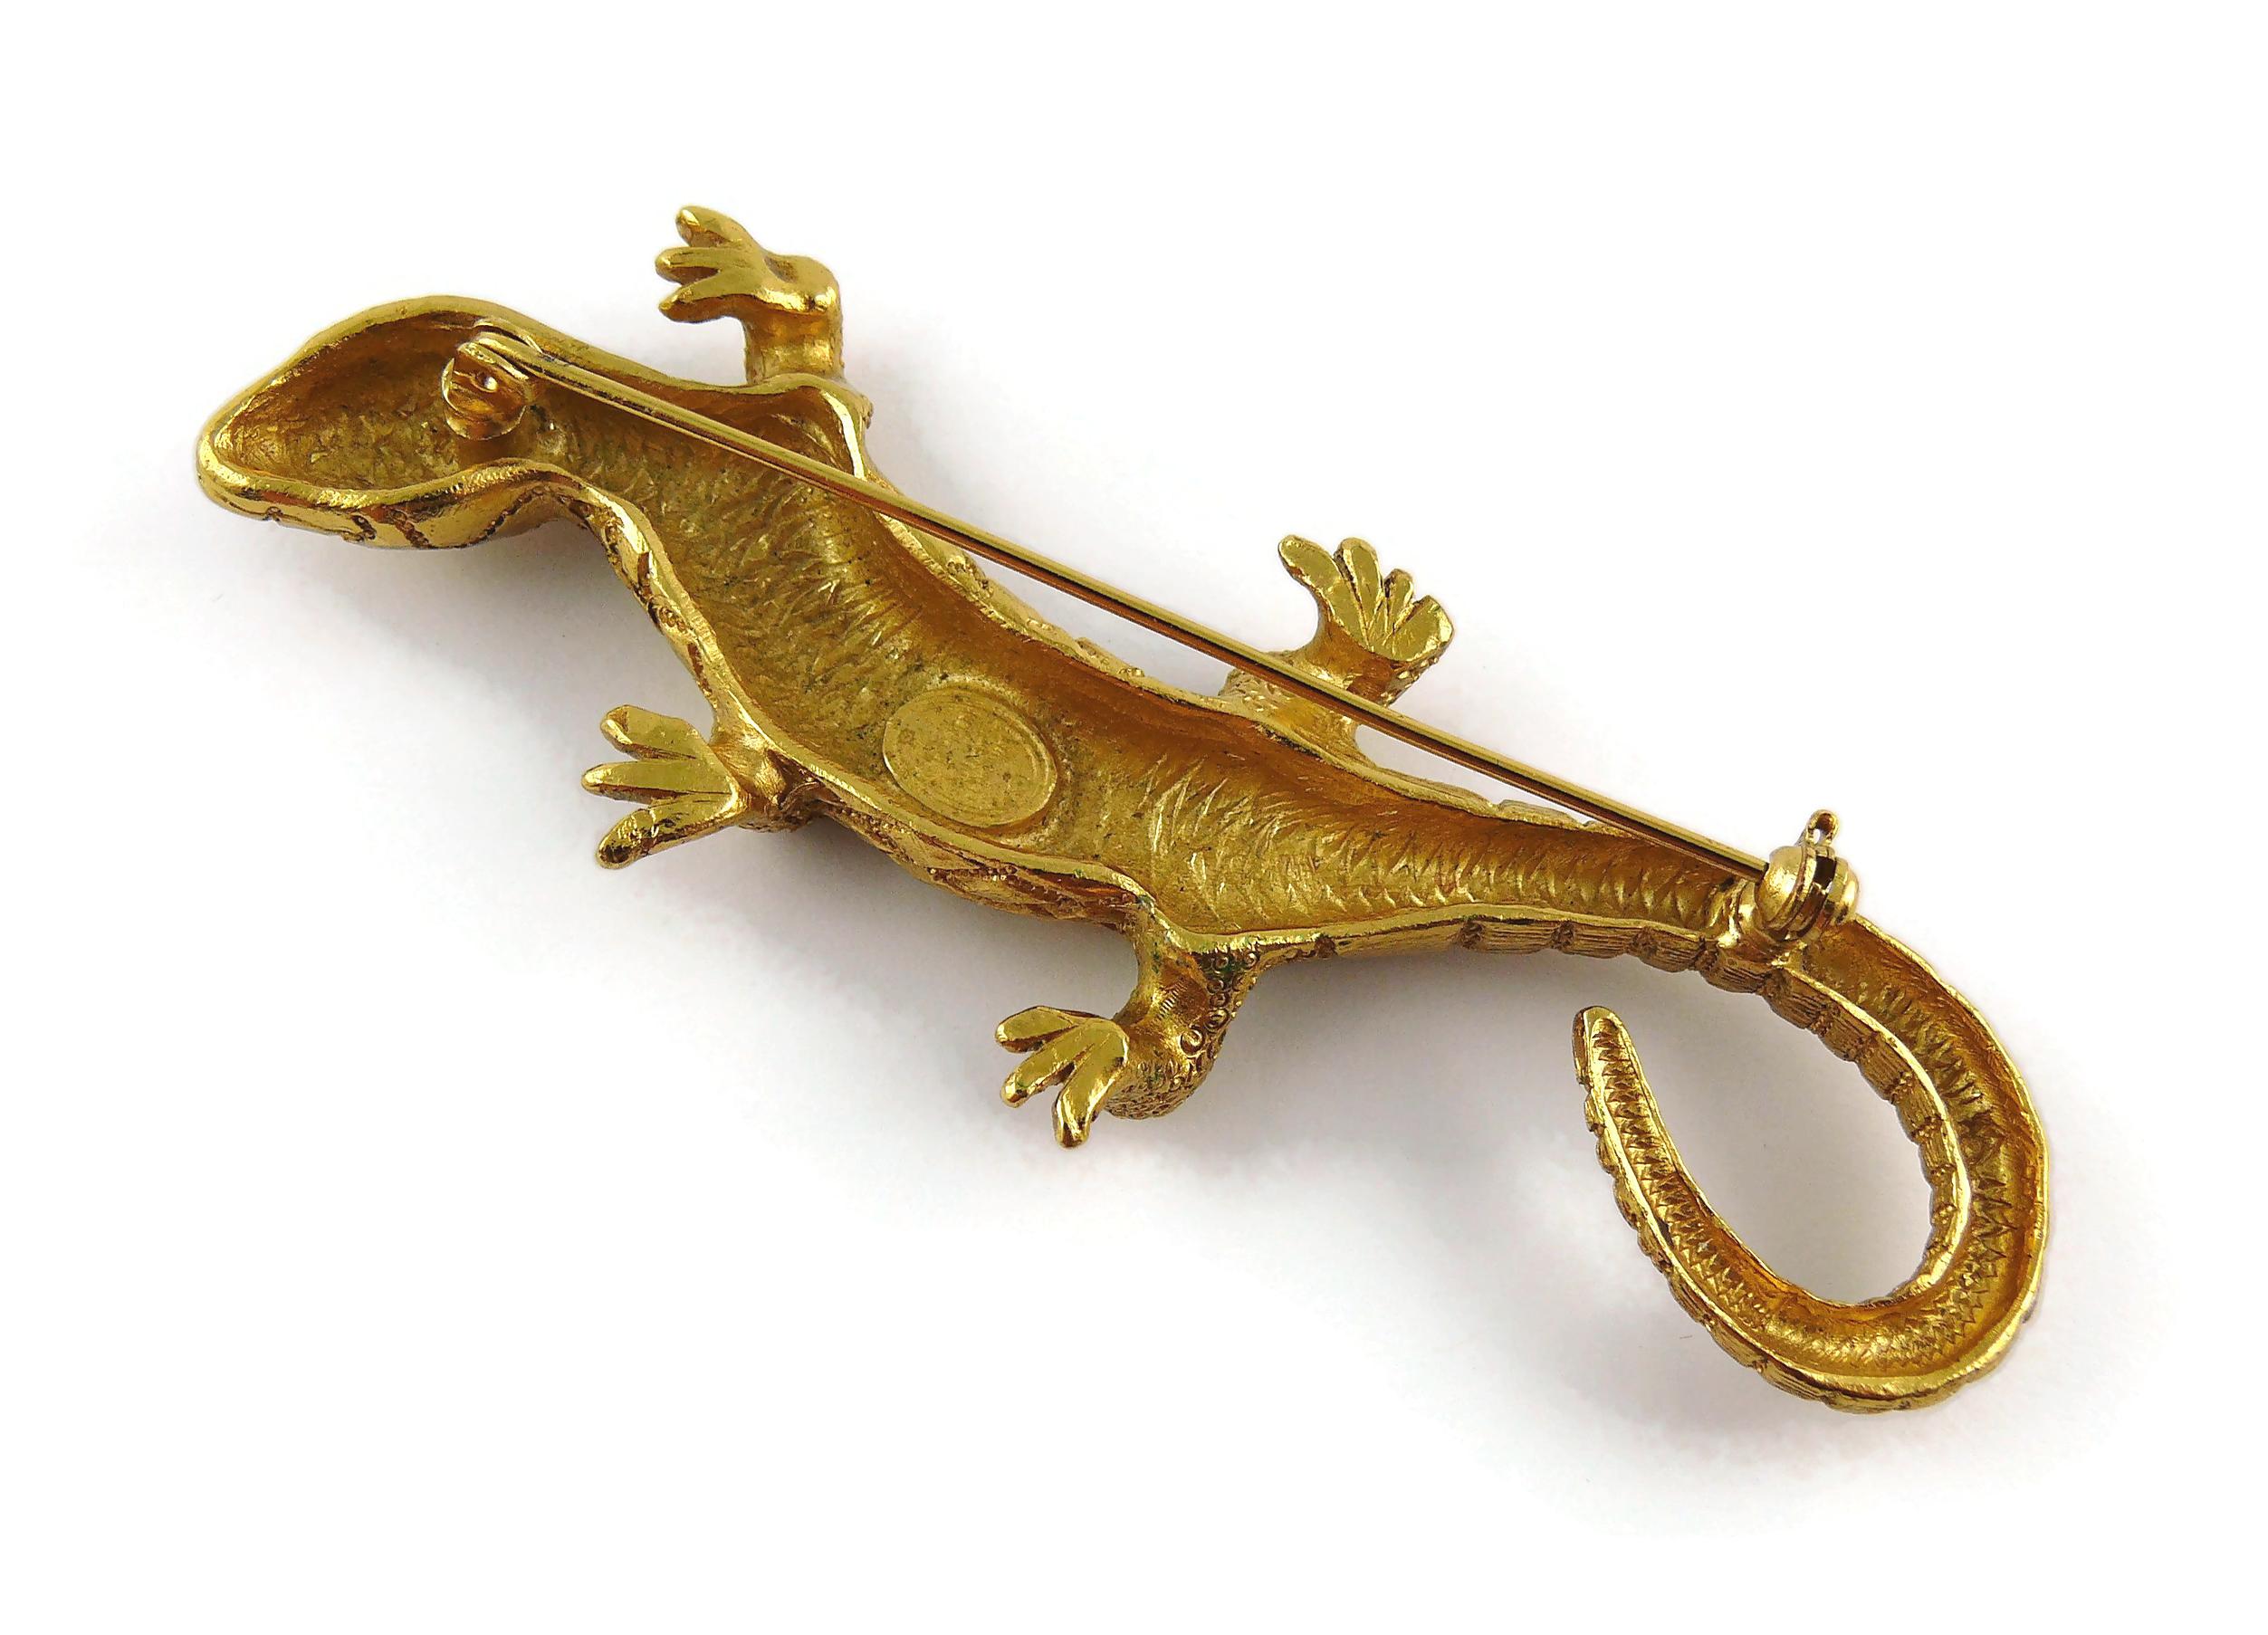 Christian Dior Boutique Vintage Gold Toned Lizard Brooch 2